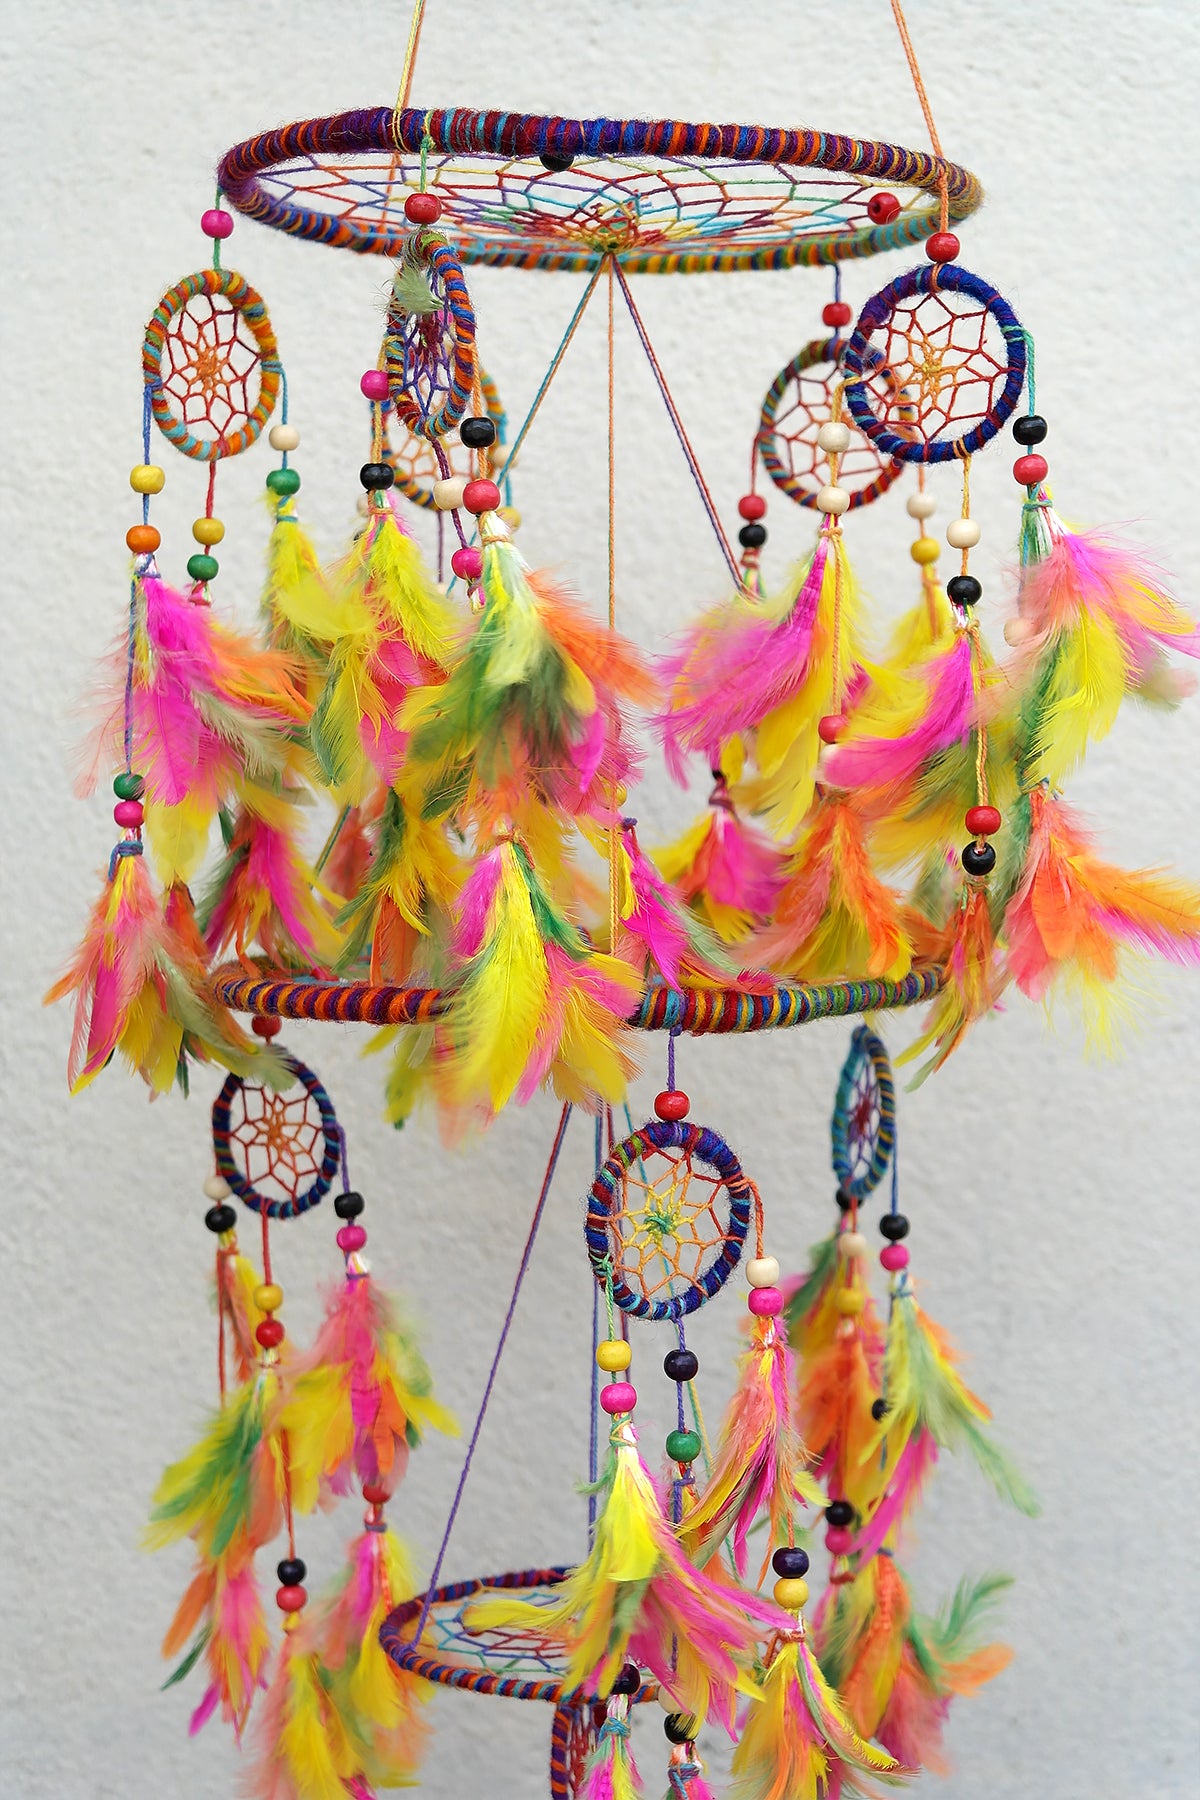 Mixed Colors Handmade Dream Catcher Feather Hanging Dreamcatcher